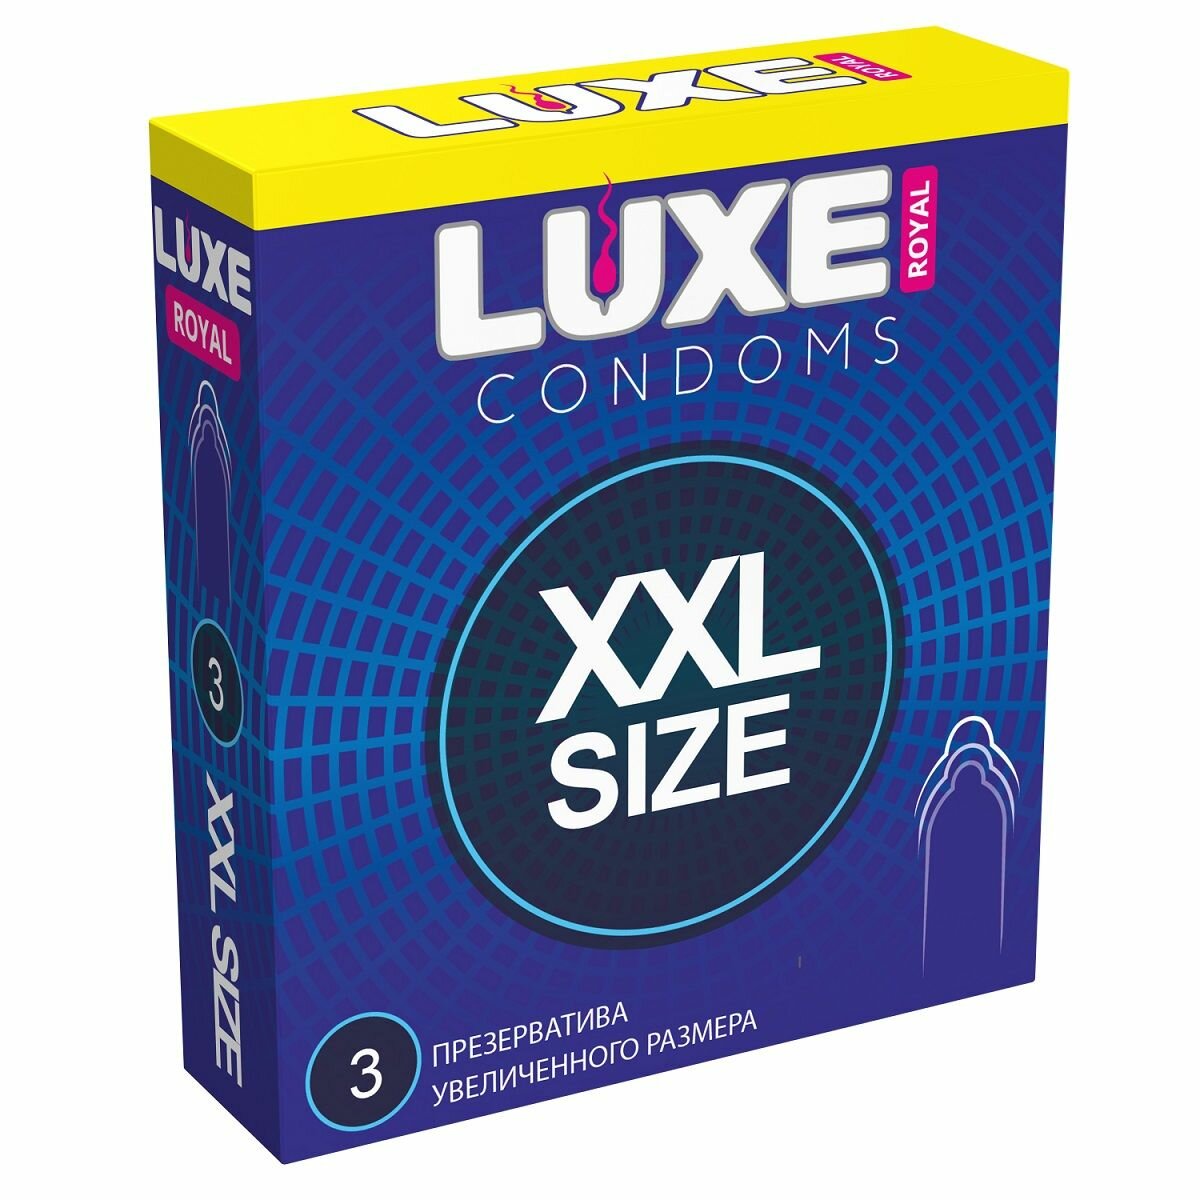 Презервативы увеличенного размера LUXE Royal XXL Size - 3 шт, цвет не указан, 2 штуки